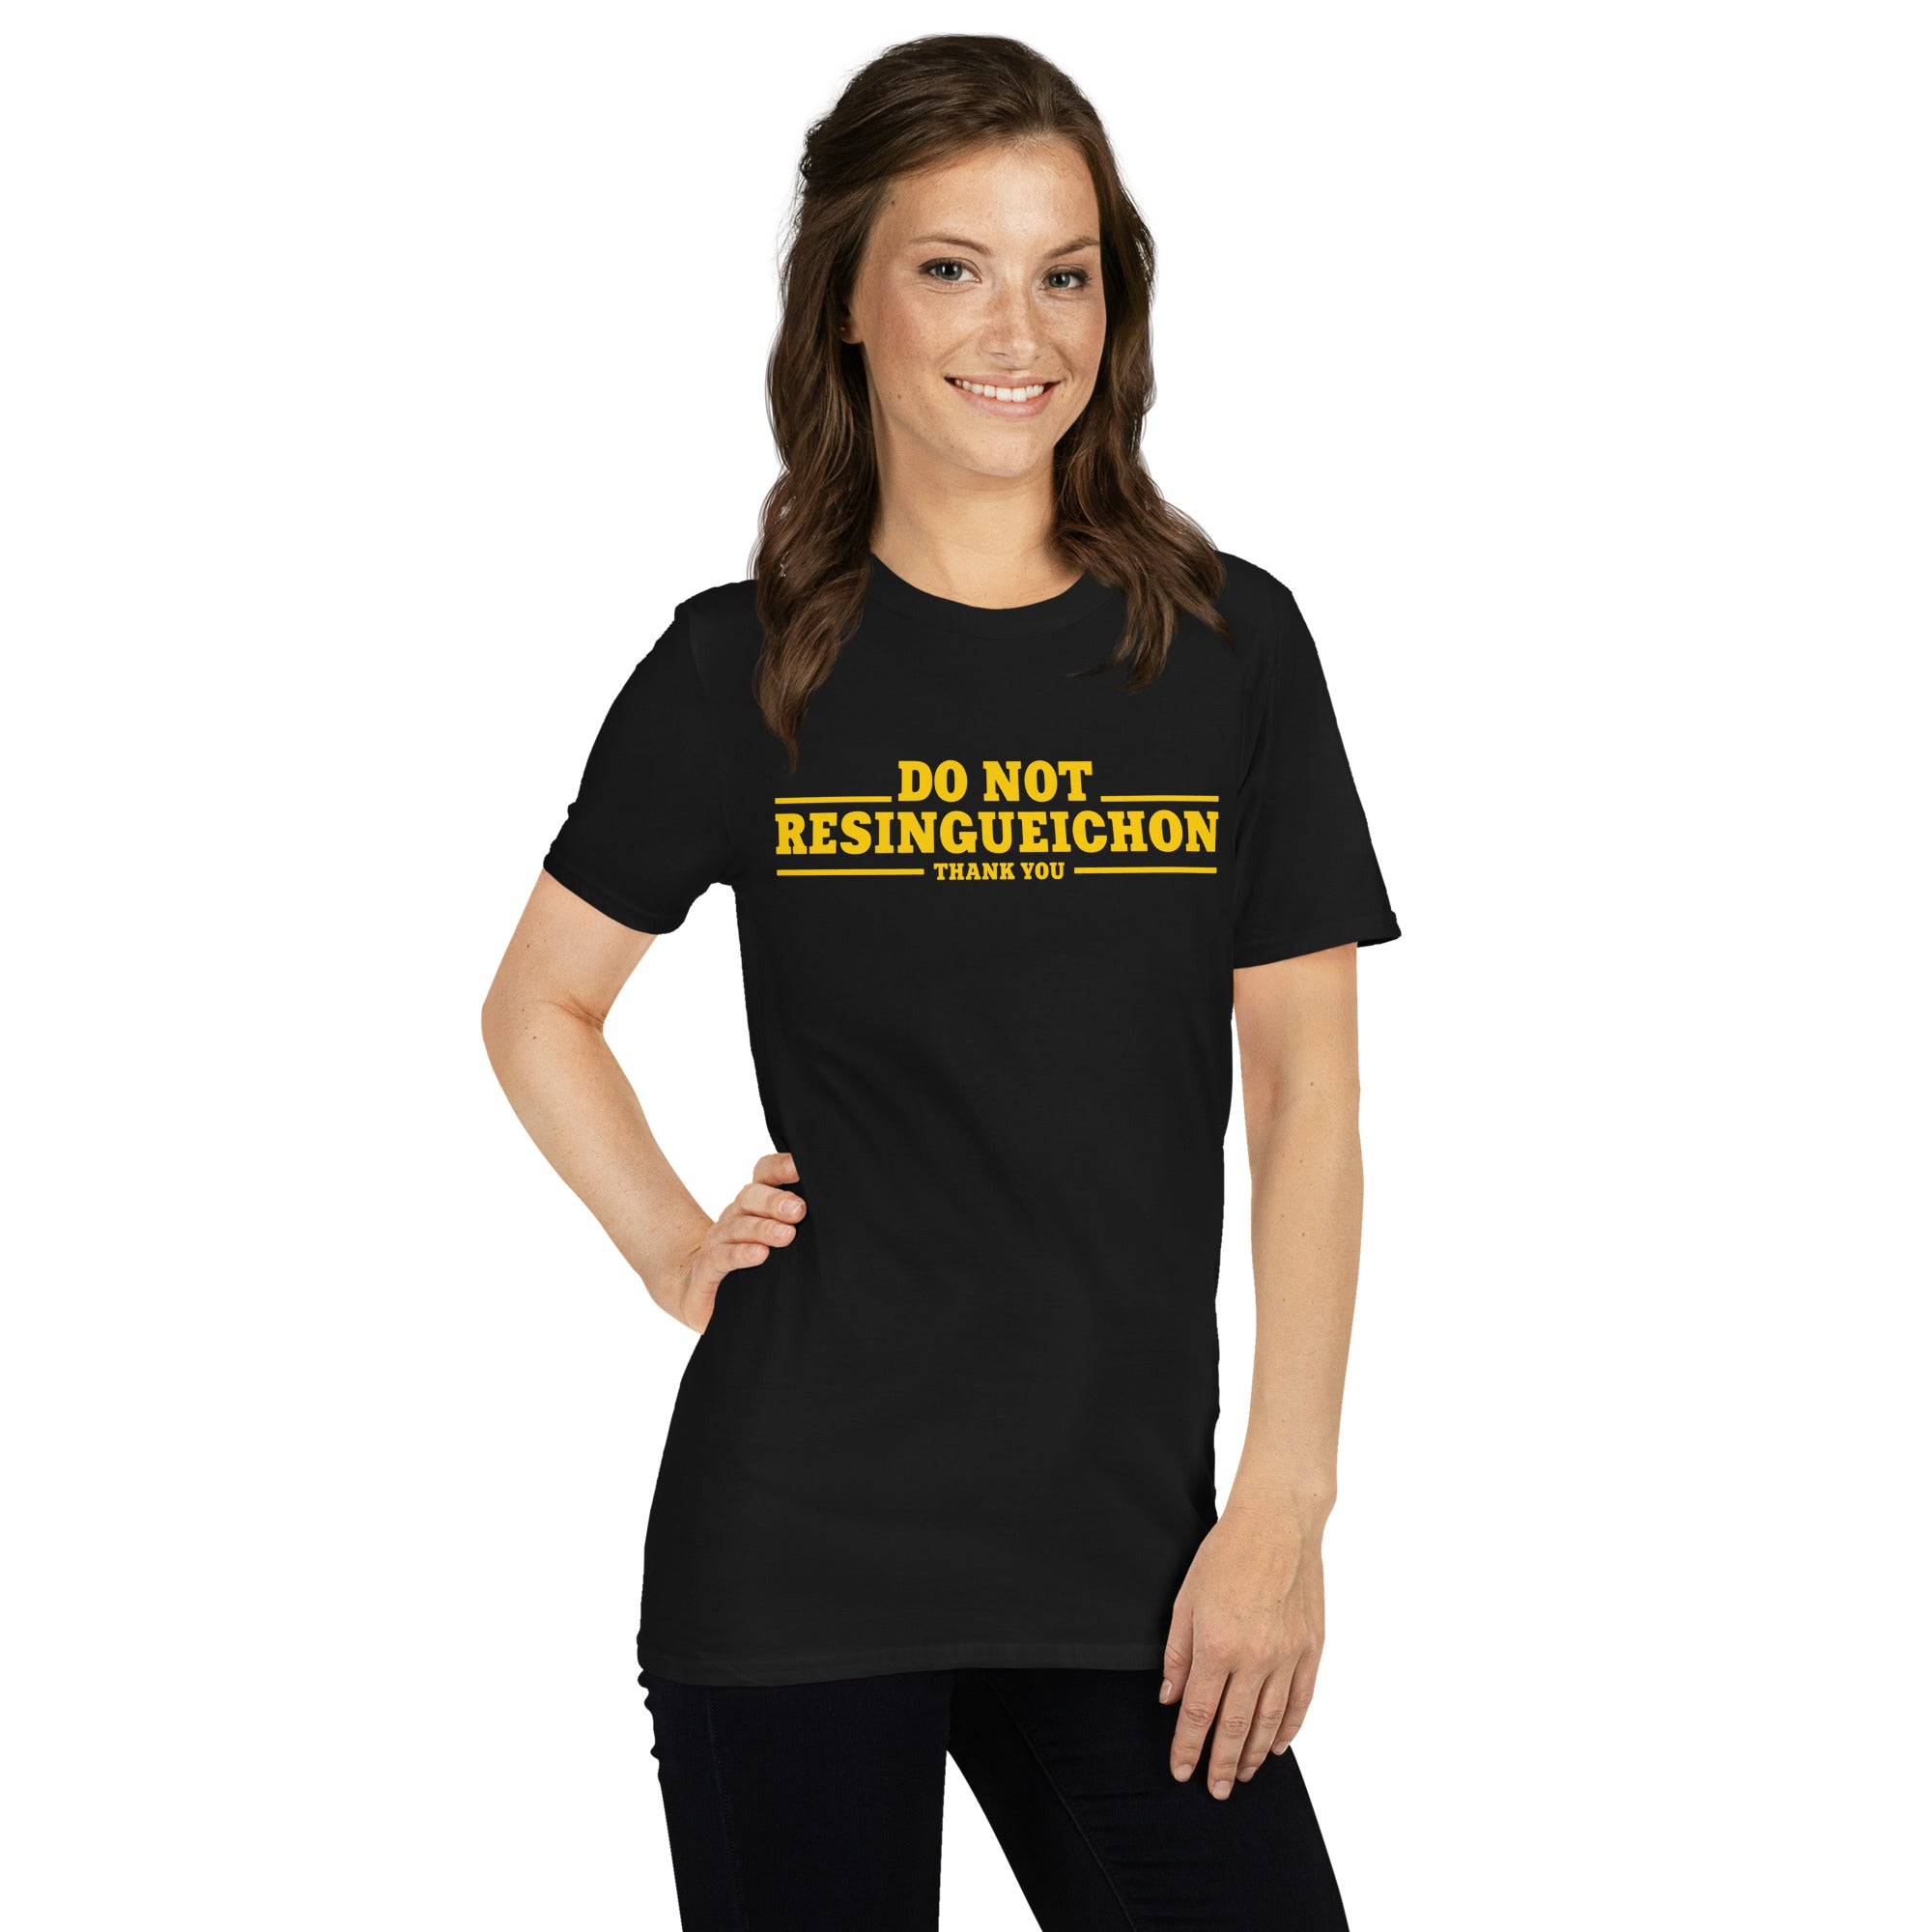 Do not resingueichon | Camiseta oscura de manga corta unisex